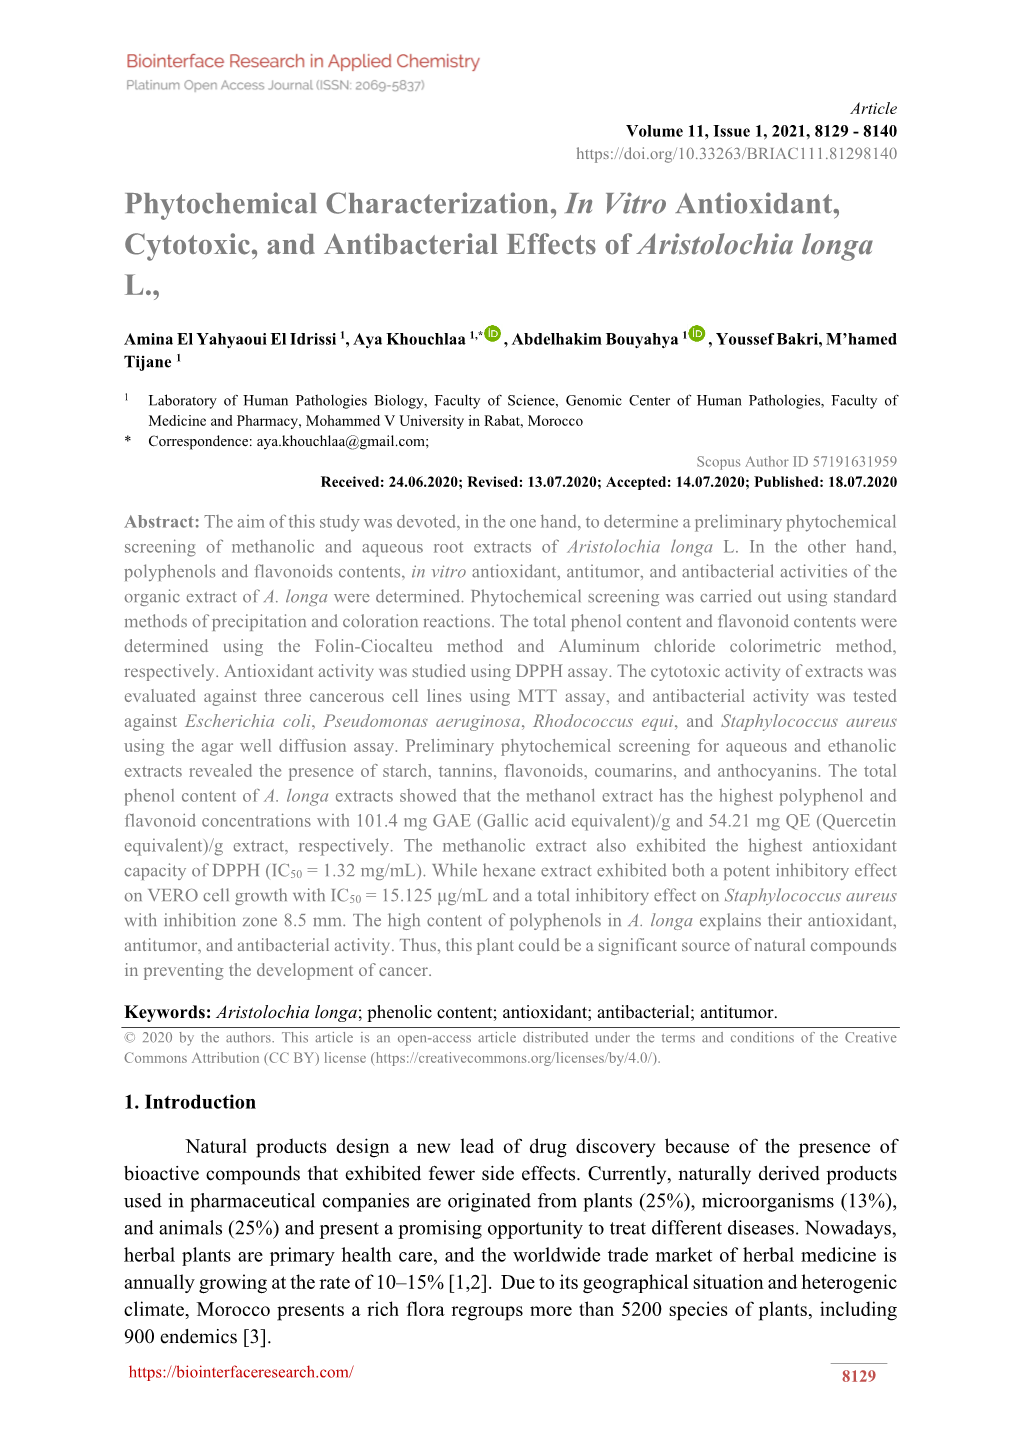 Phytochemical Characterization, in Vitro Antioxidant, Cytotoxic, and Antibacterial Effects of Aristolochia Longa L